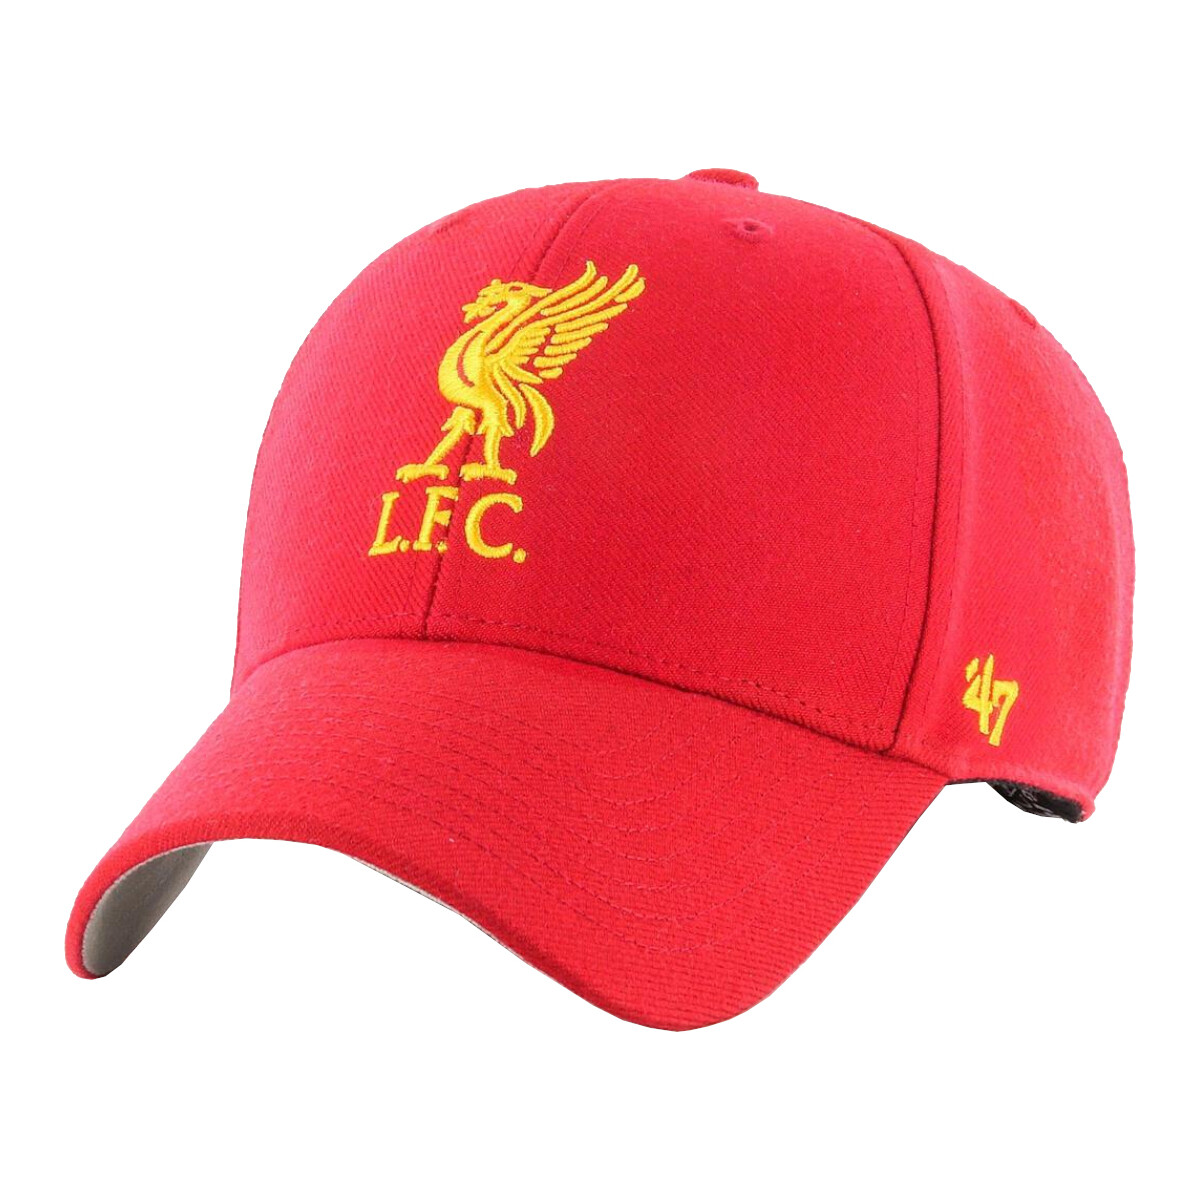 Accesorios textil Hombre Gorra '47 Brand EPL FC Liverpool Cap Rojo